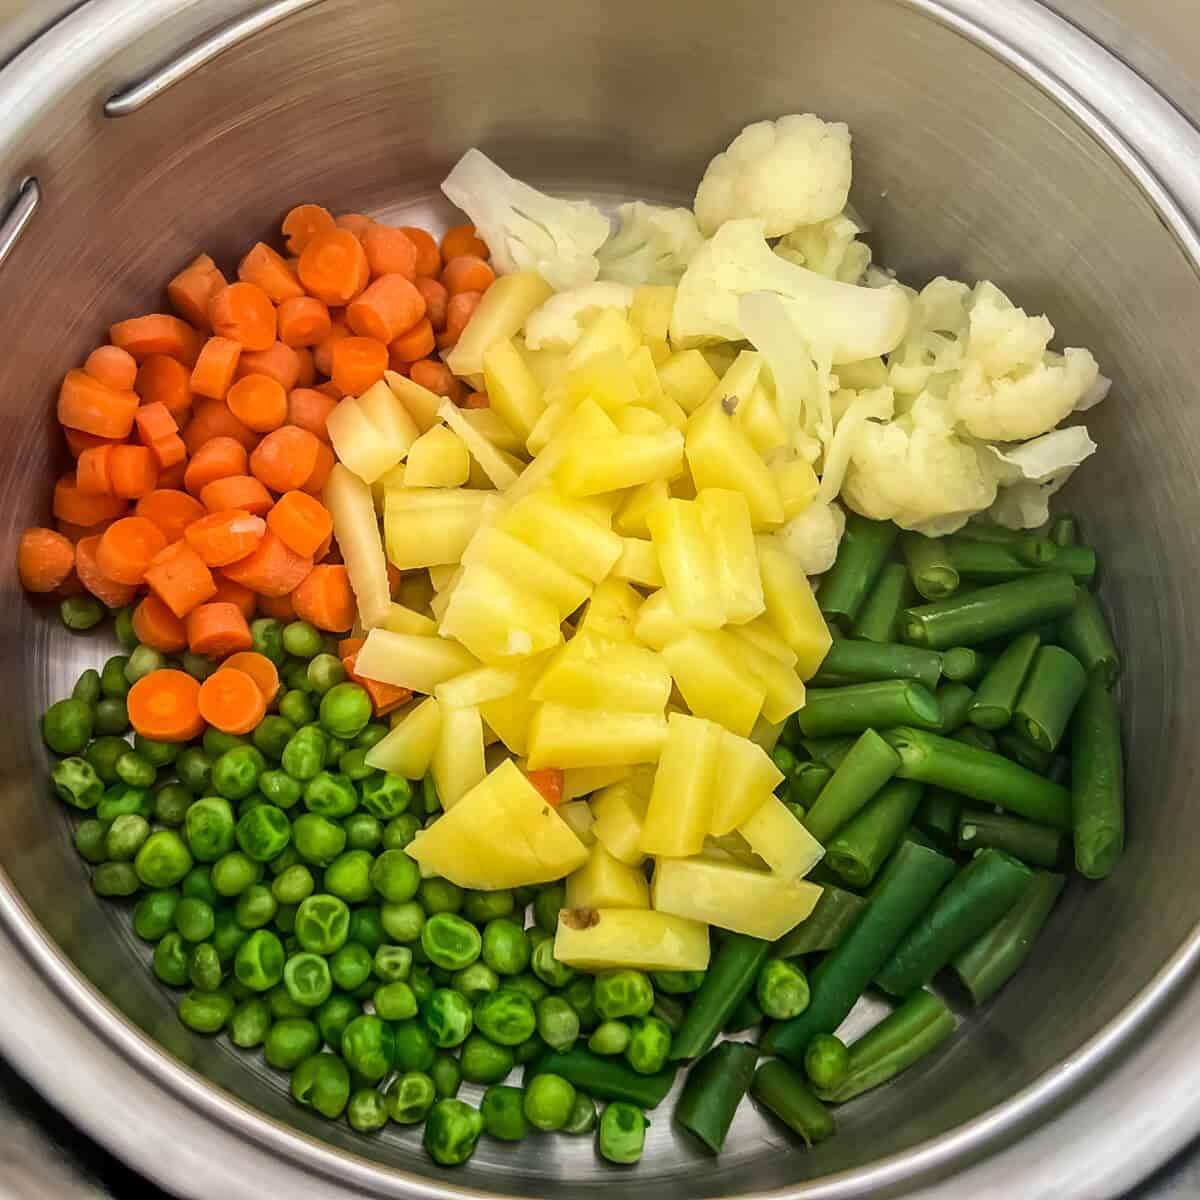 A medley of veggies in a steamer basket